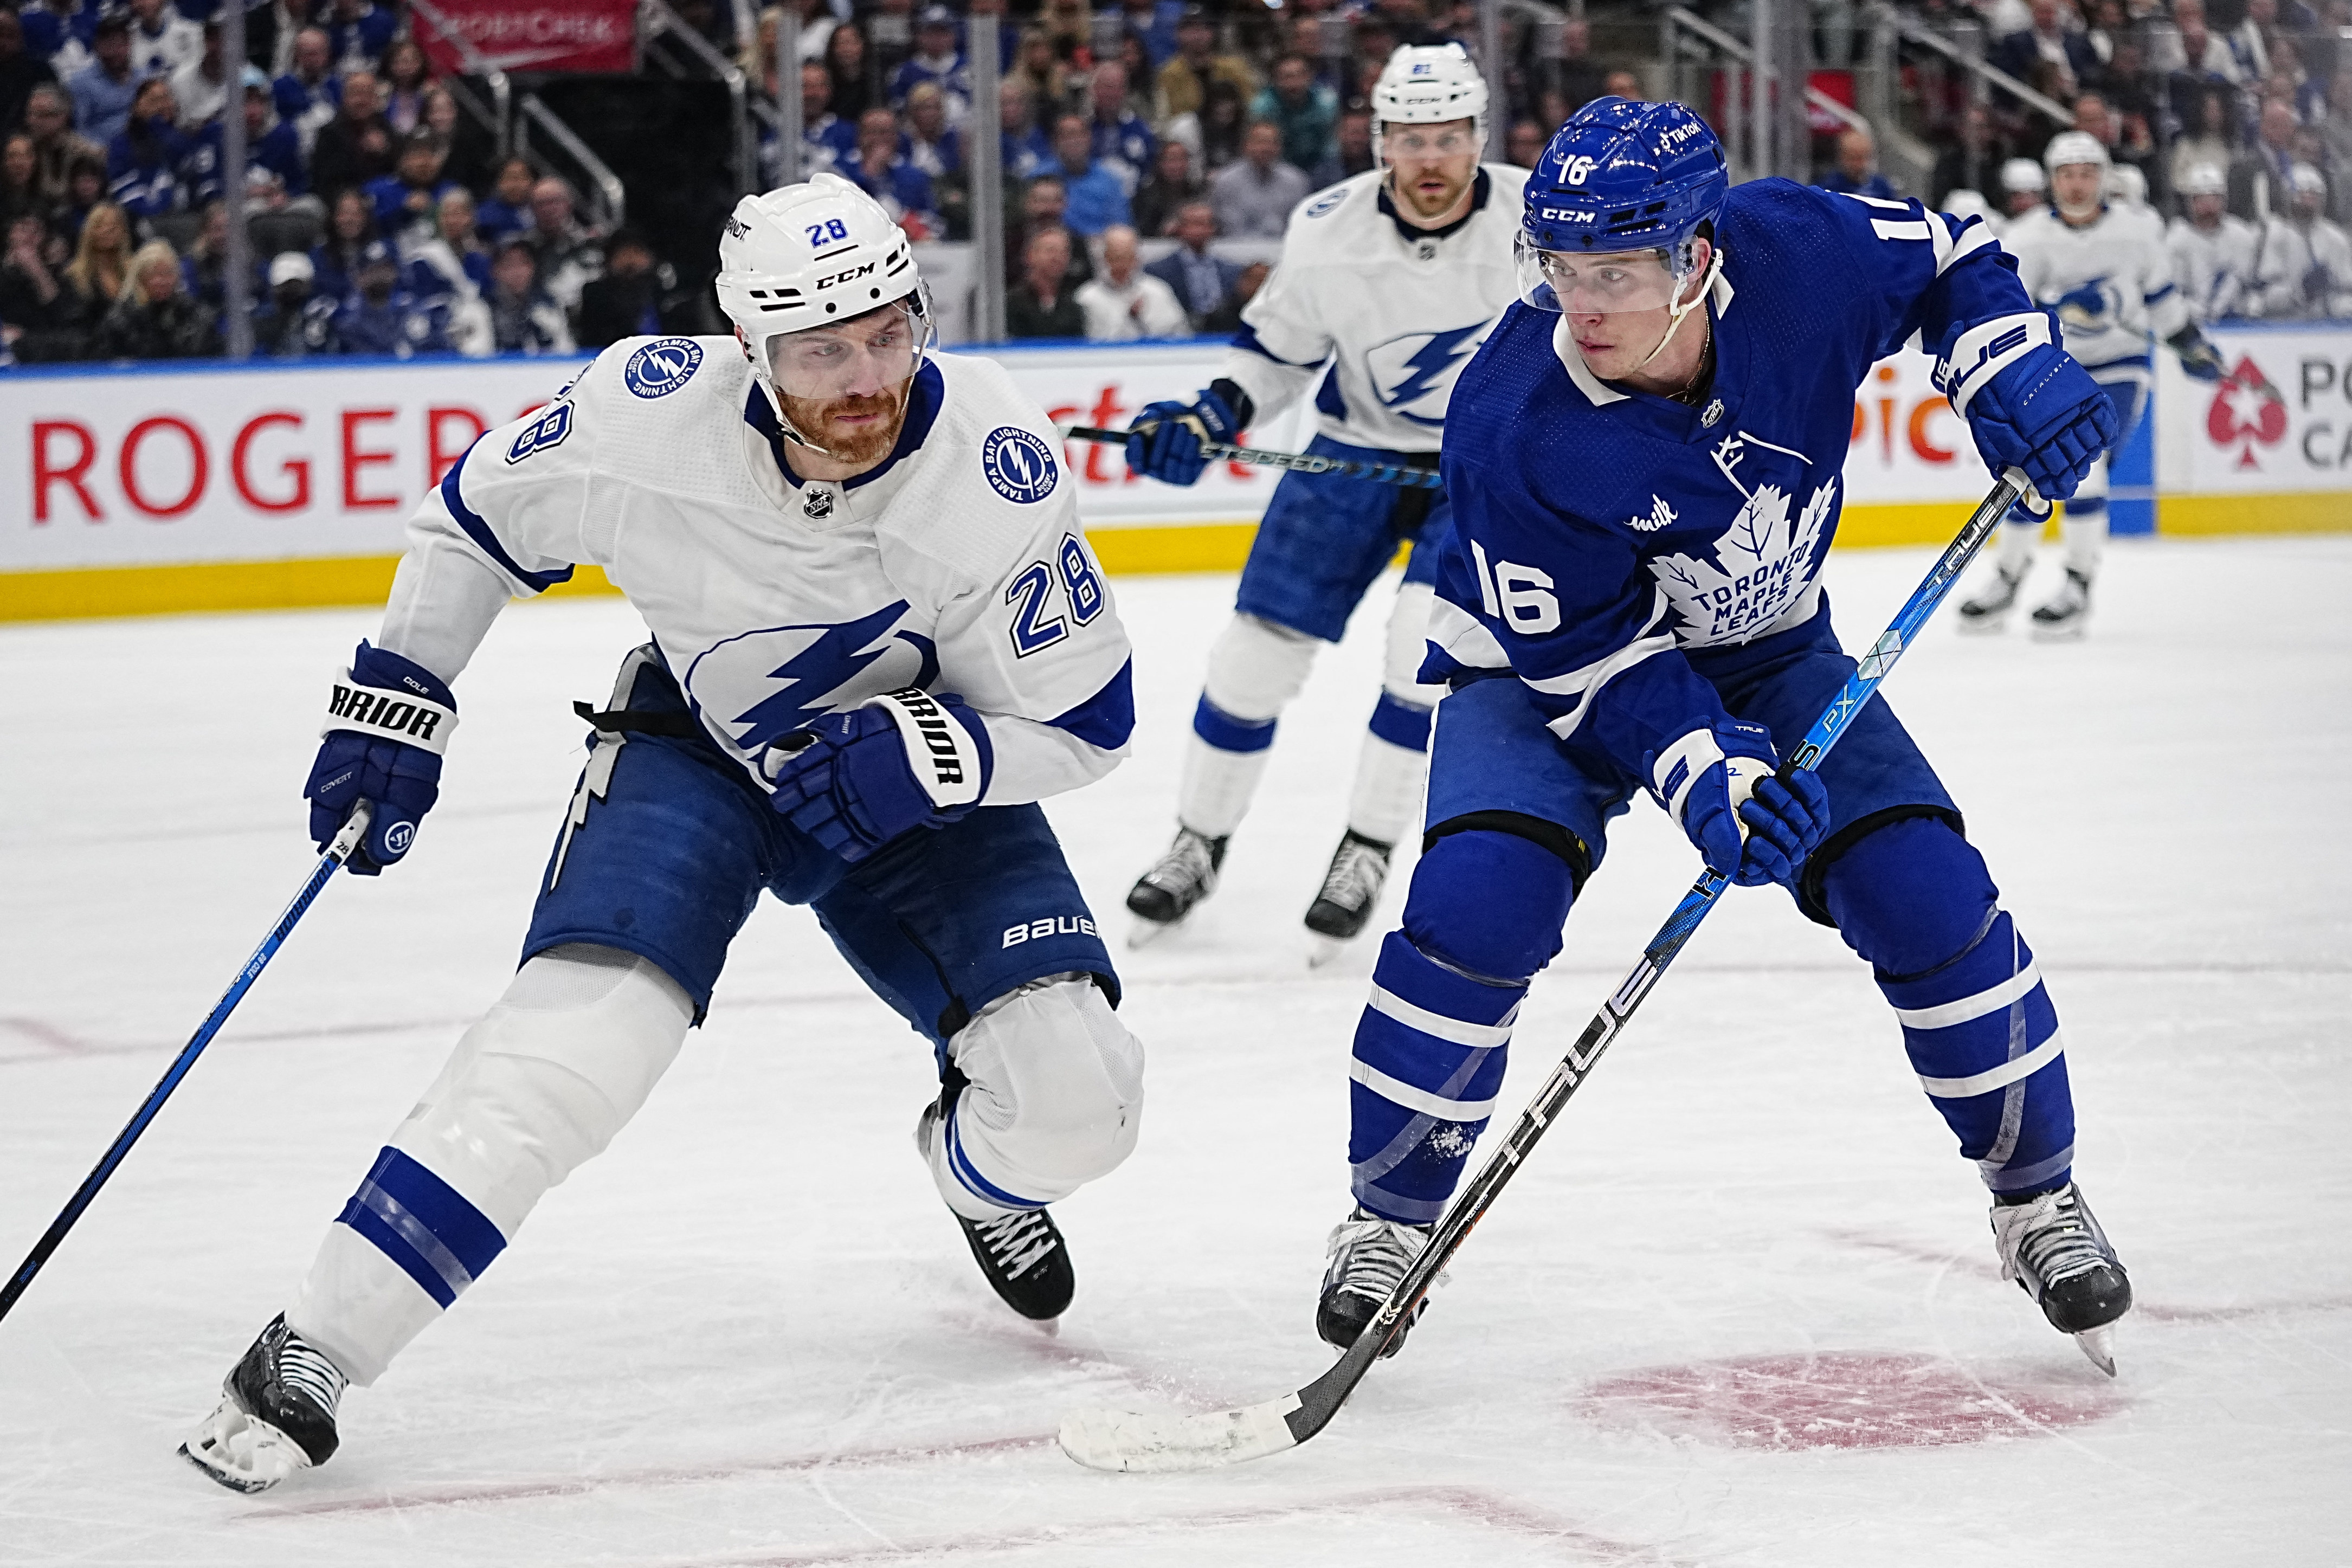 Lightning strike to shock Leafs in Stanley Cup opener | Reuters